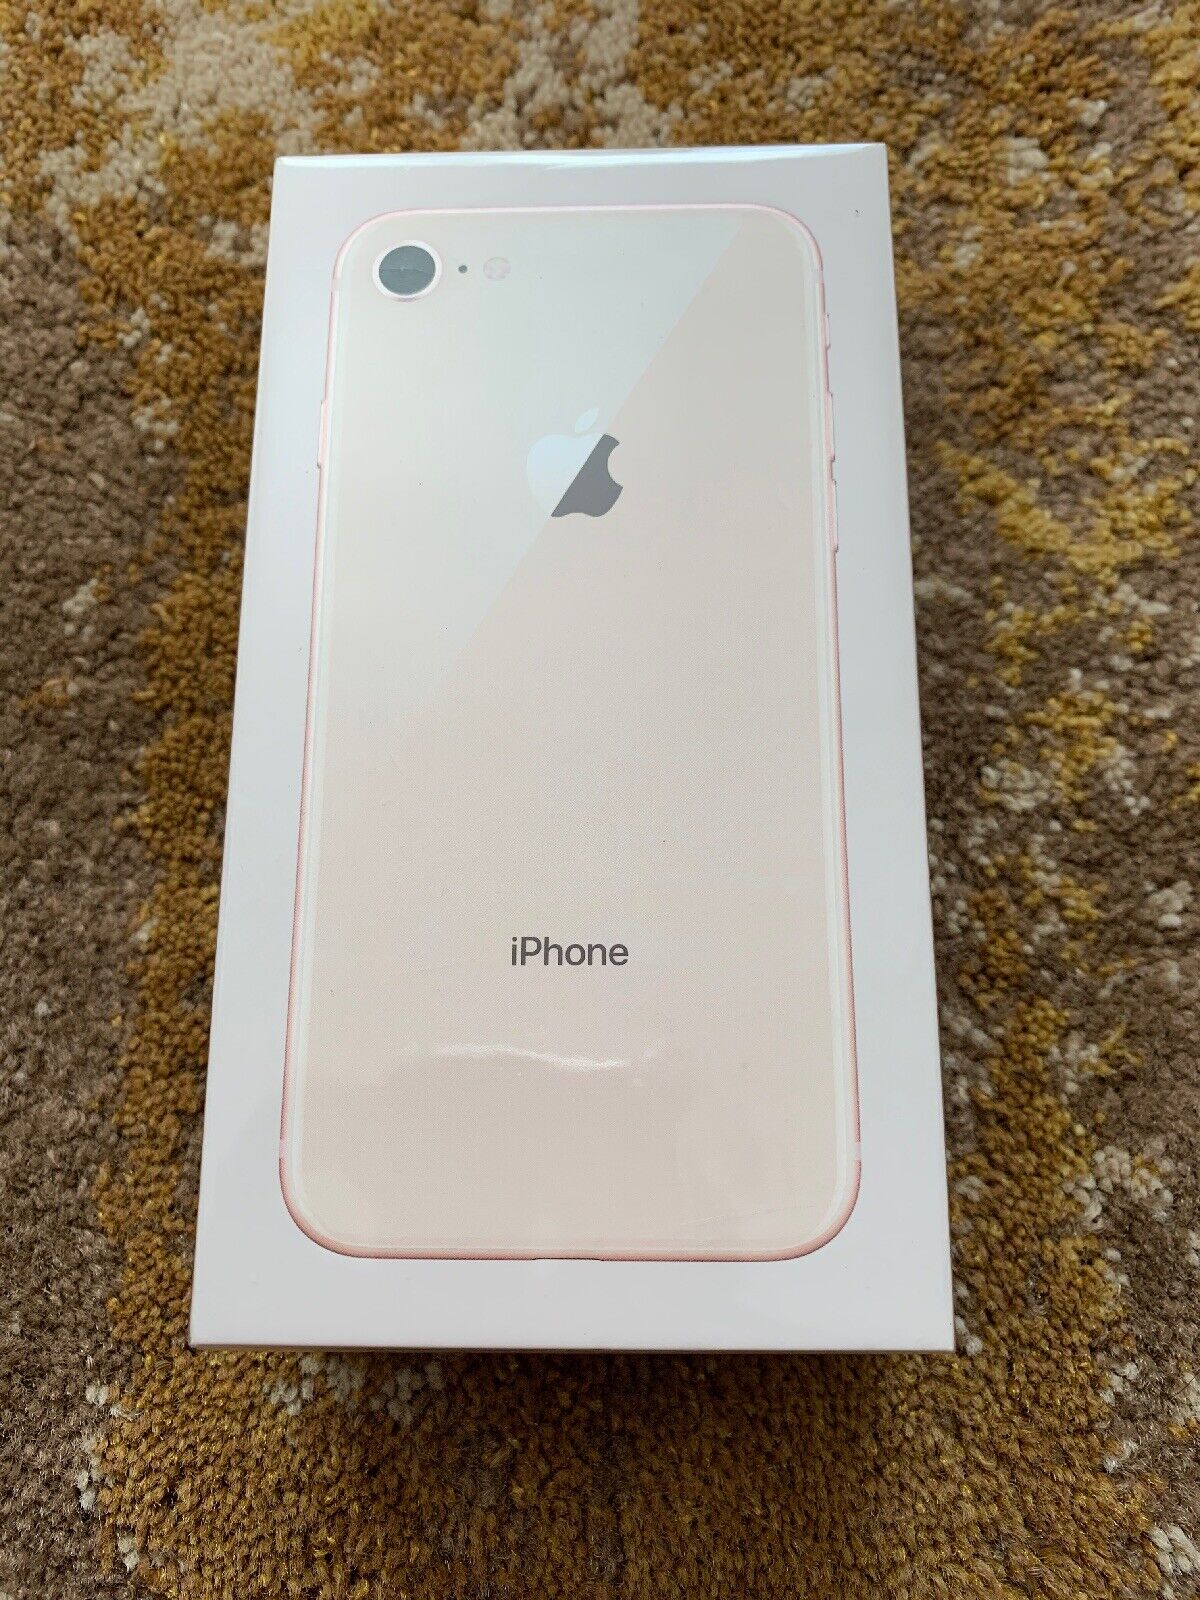 Apple iPhone 8 - 256GB - Gold (Unlocked) A1863 (CDMA + GSM 